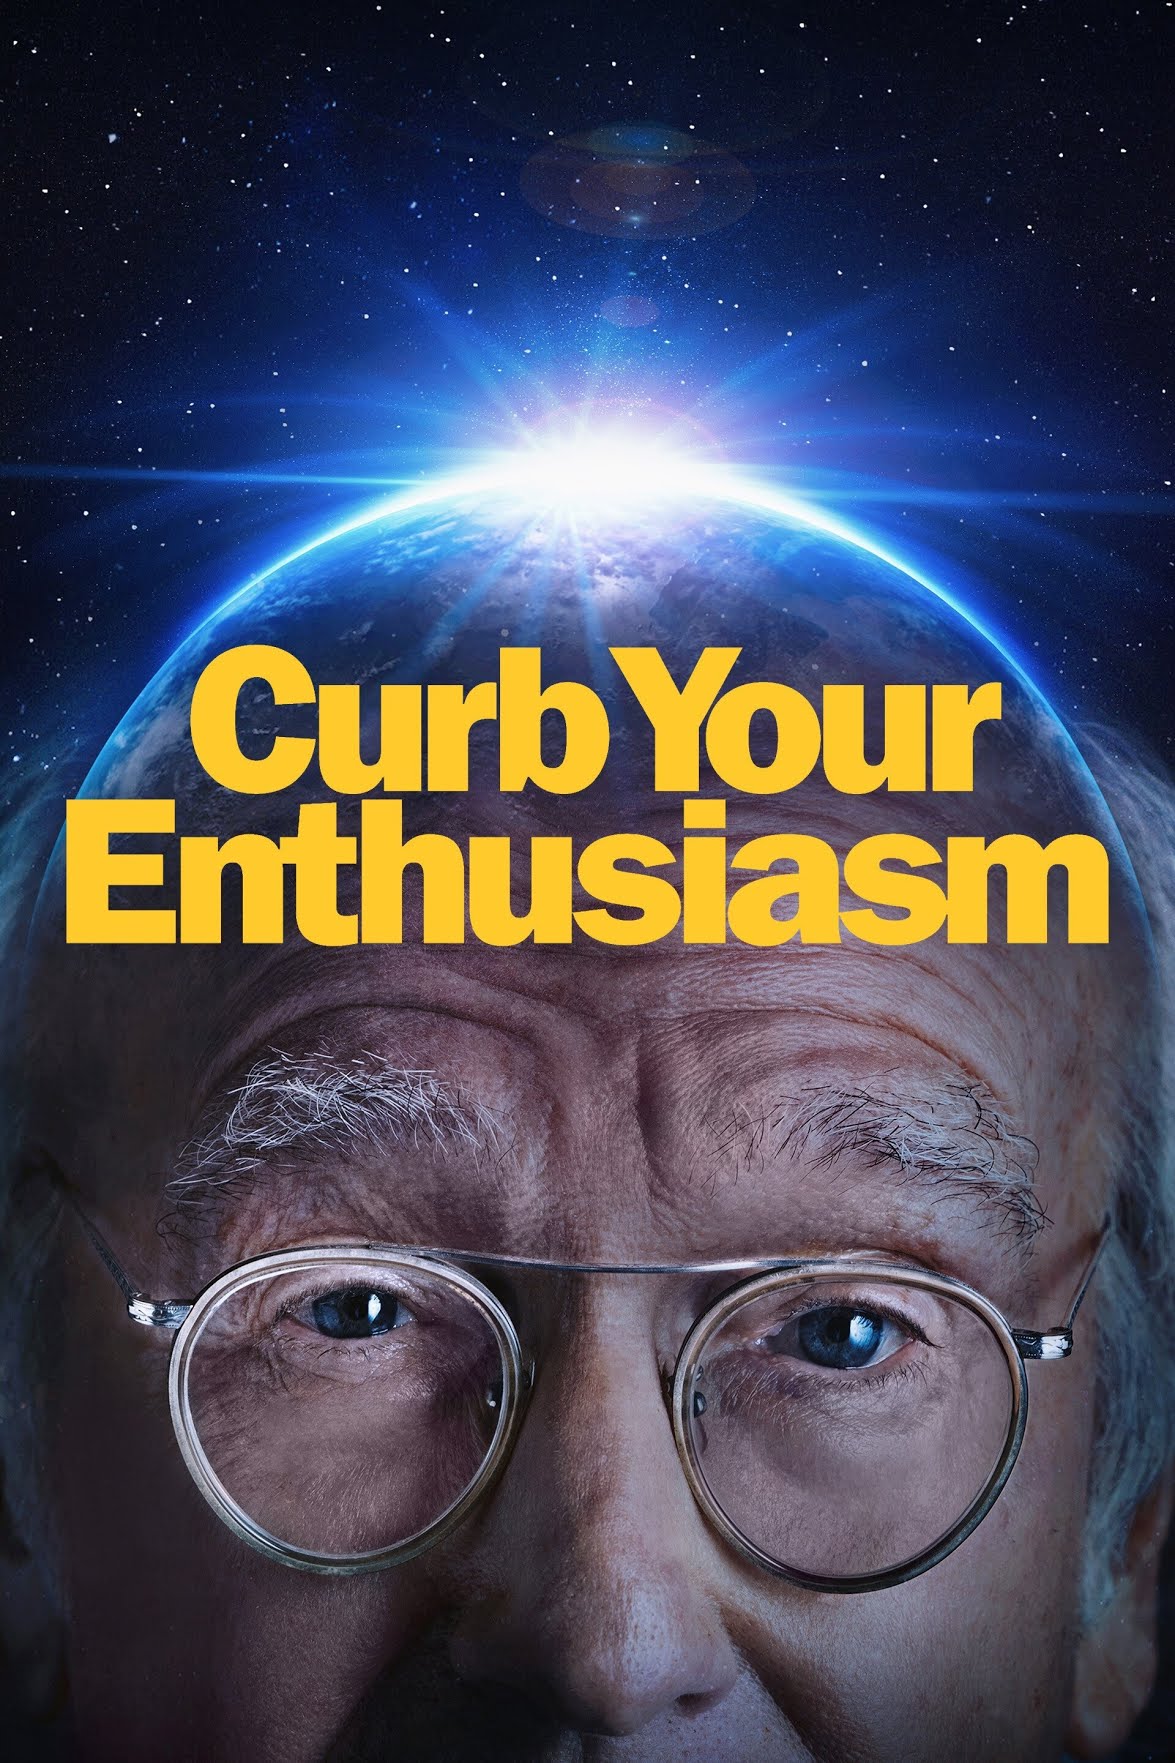 Curb Your Enthusiasm movie portrait